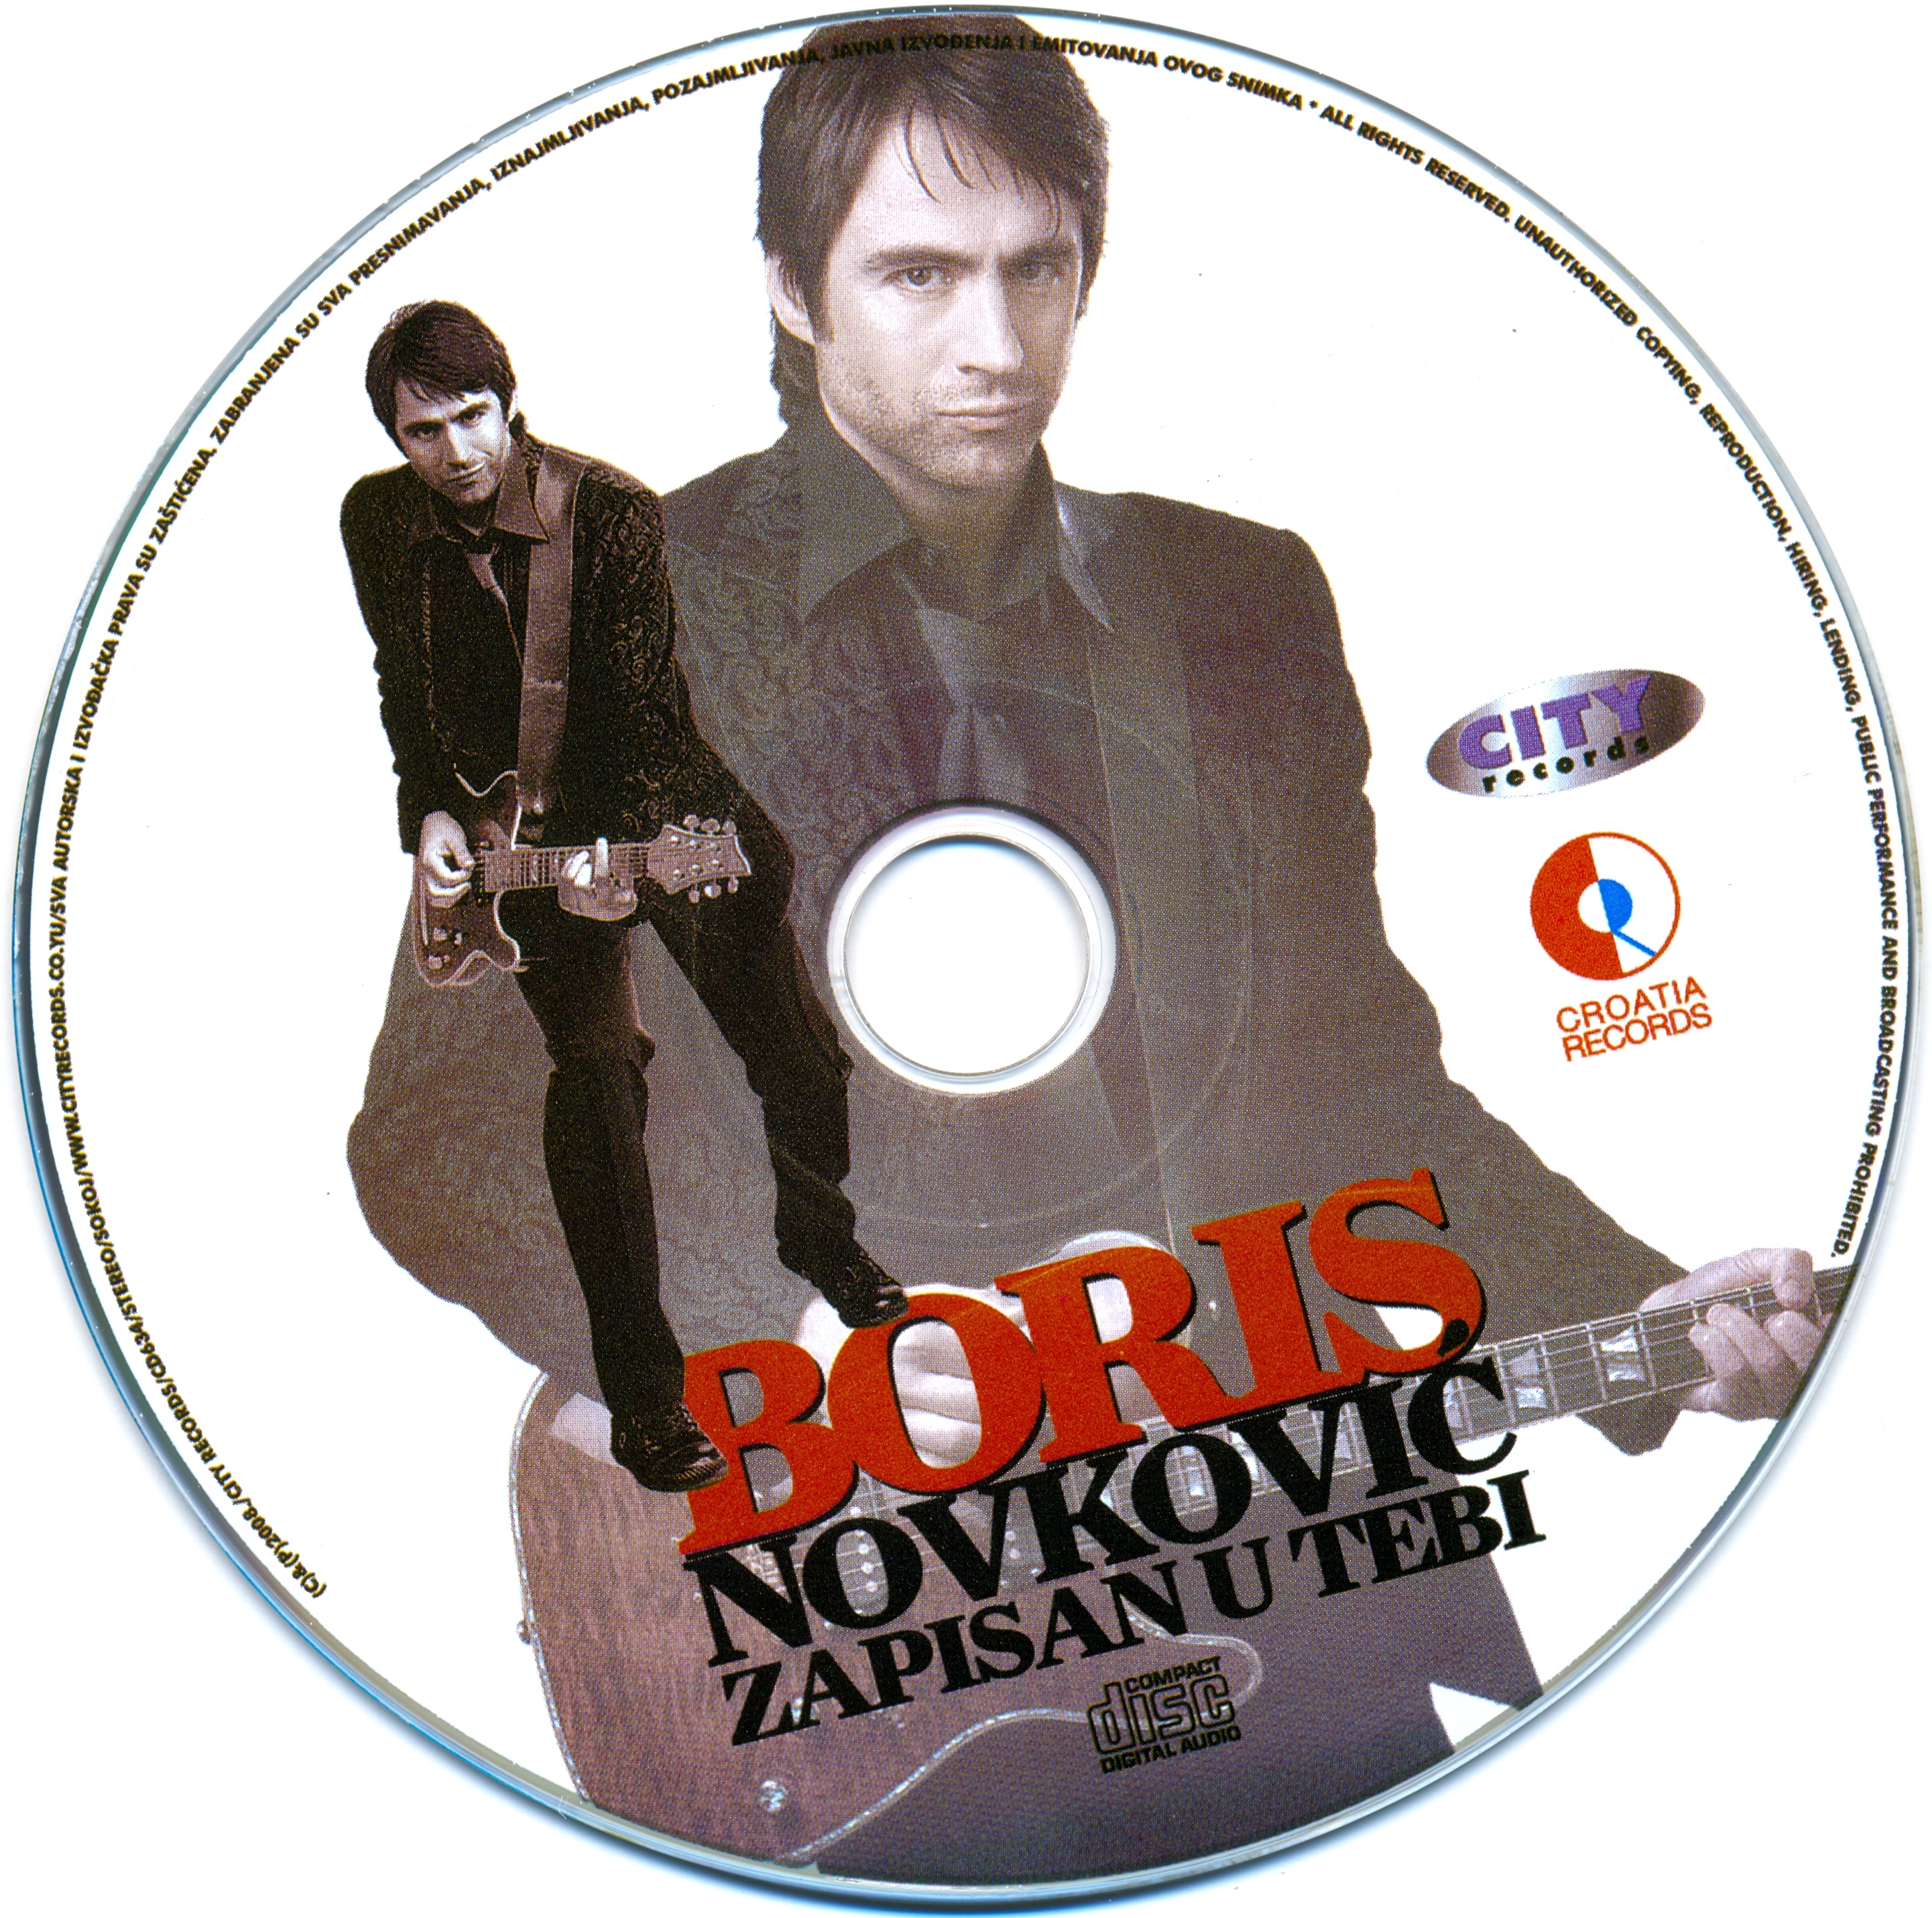 Boris Novkovic Zapisan u tebi 2008 cd